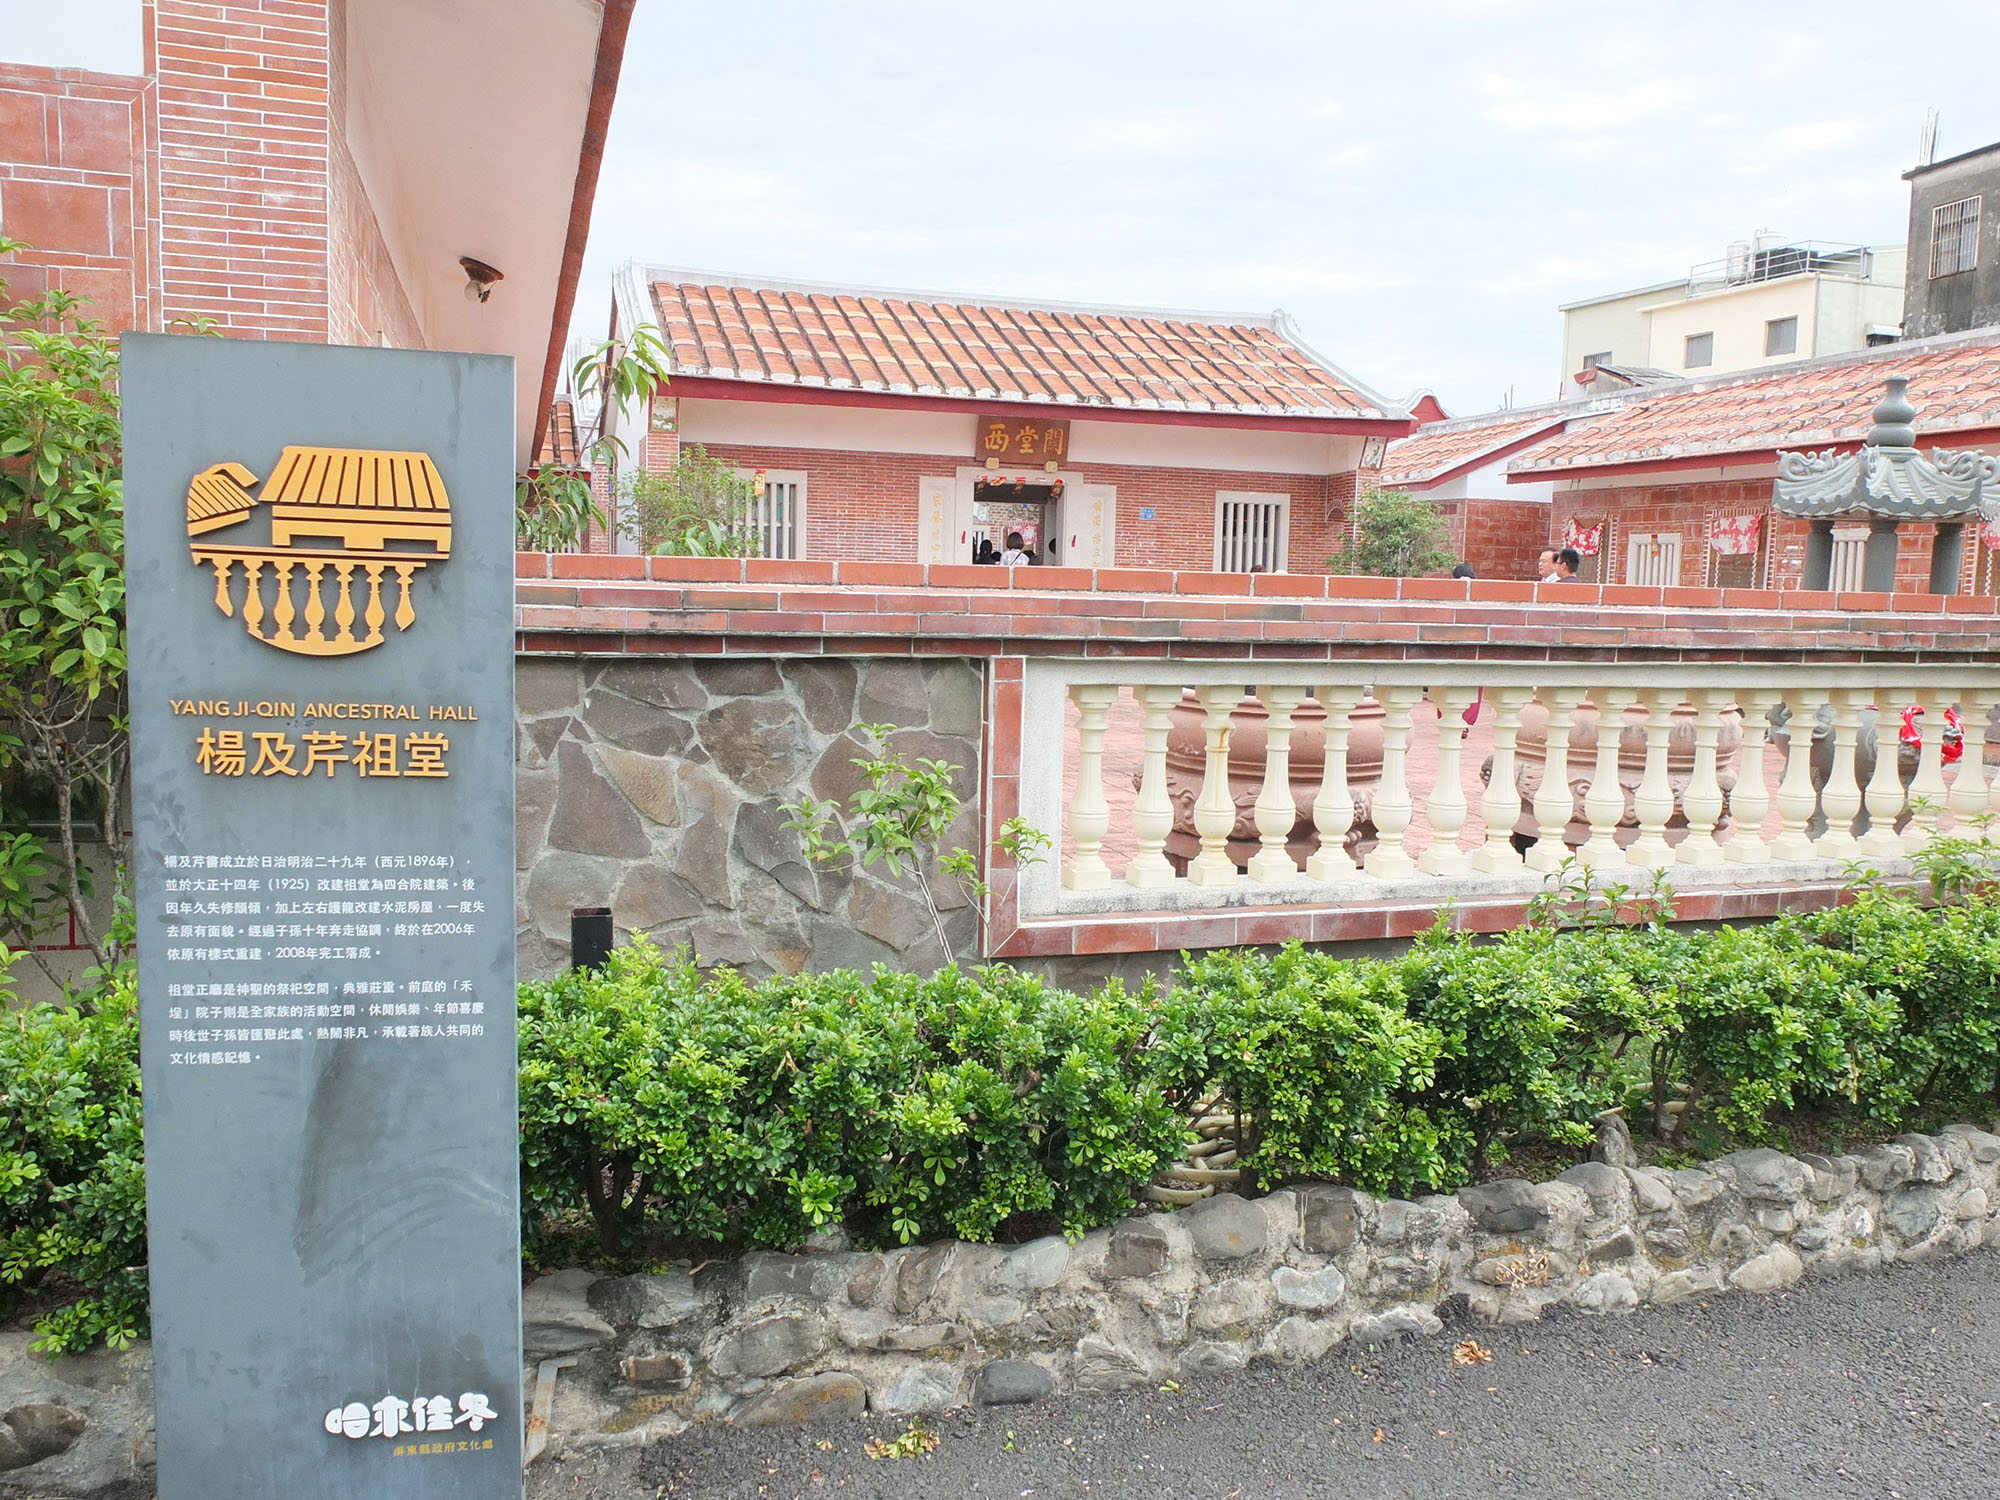 The Yang Ji-qin Ancestral Hall